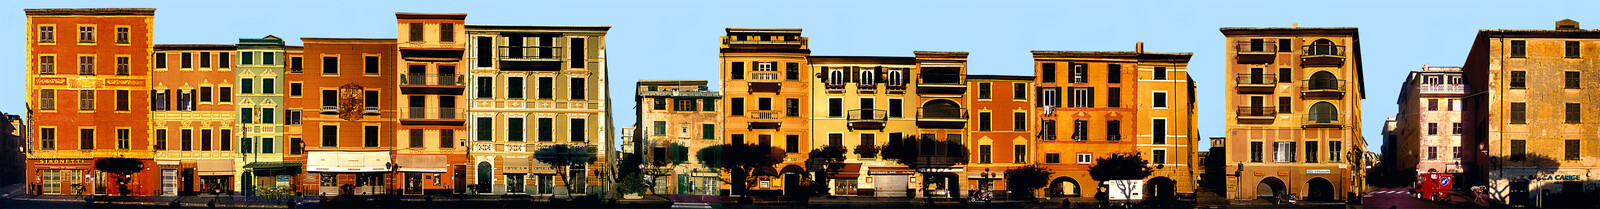 Santa Margherita #2, Venice, Italy - Larry Yust